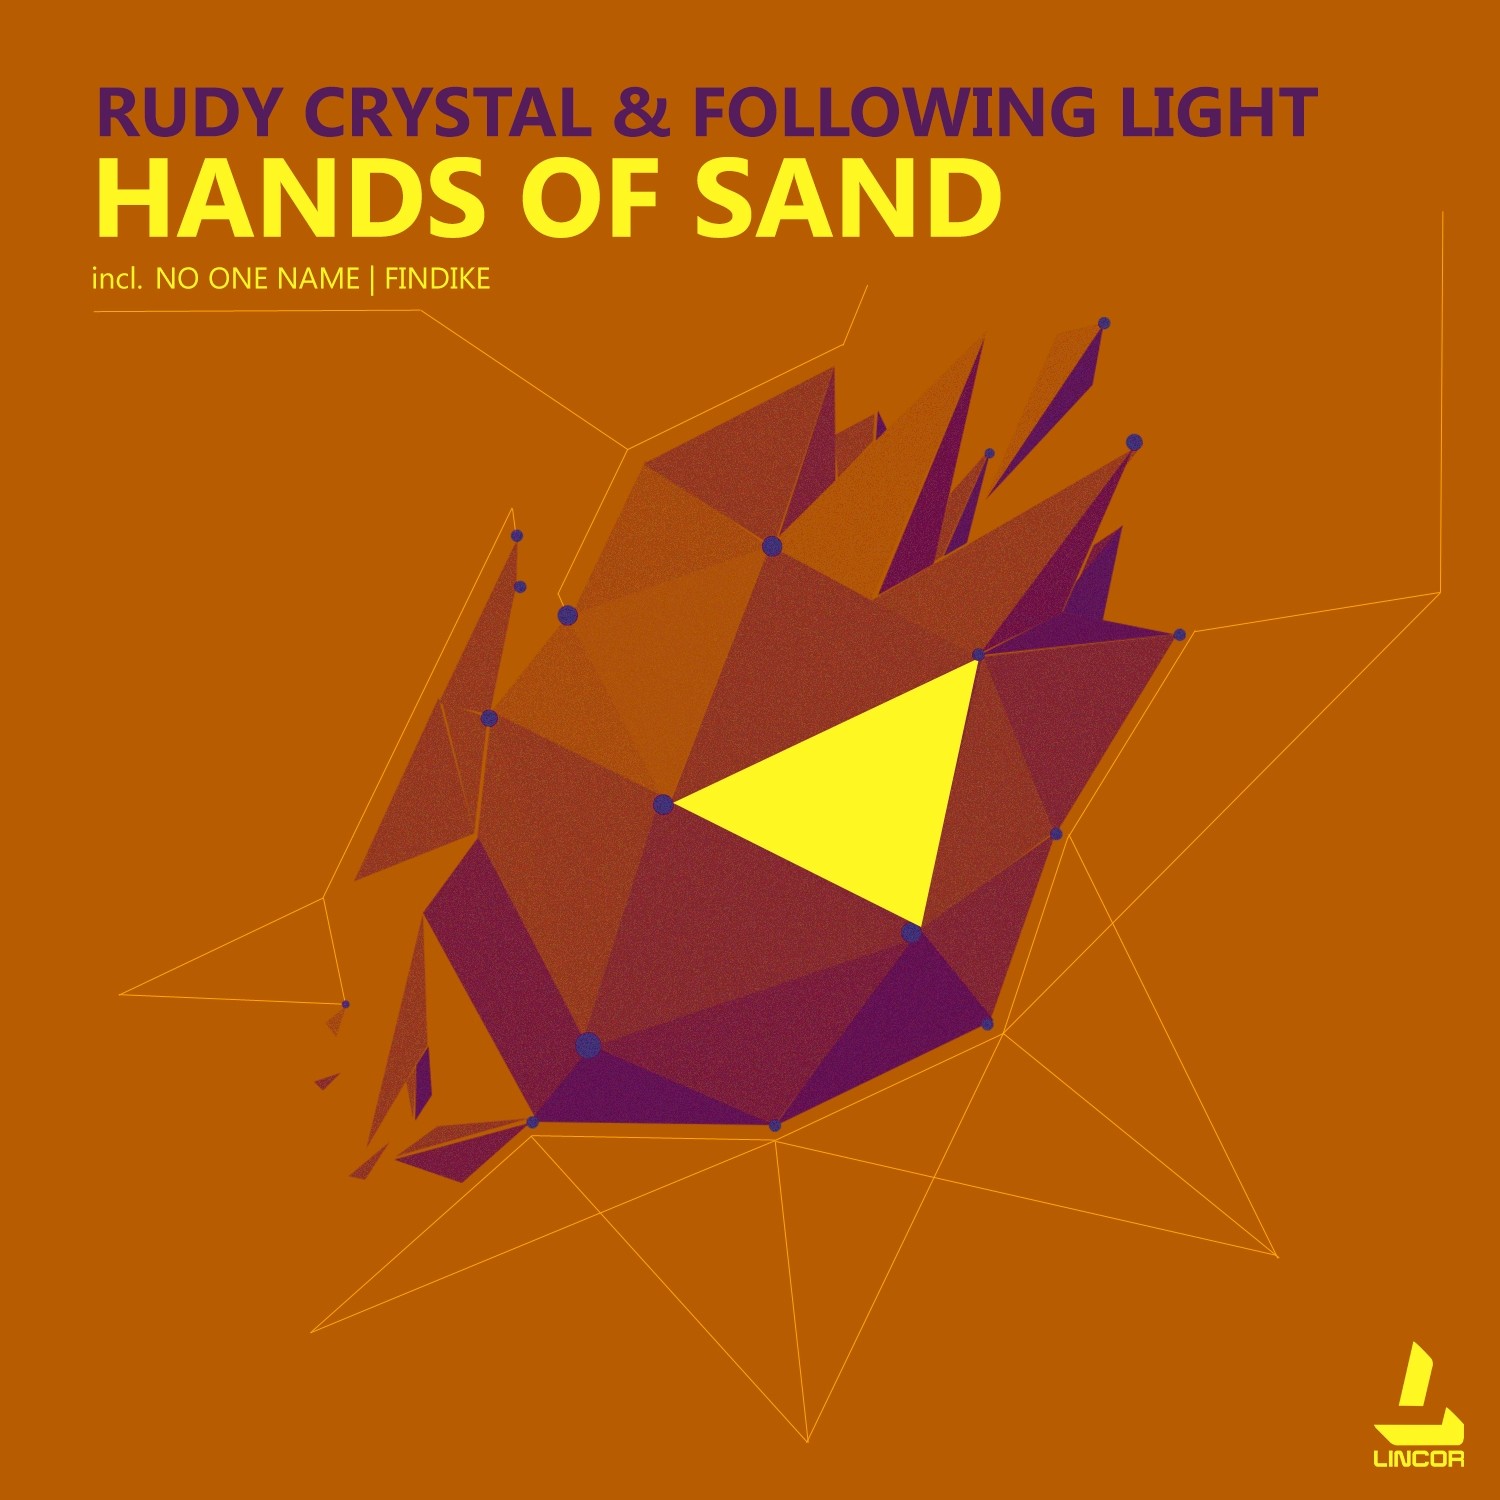 Hands of Sand (Findike Remix)